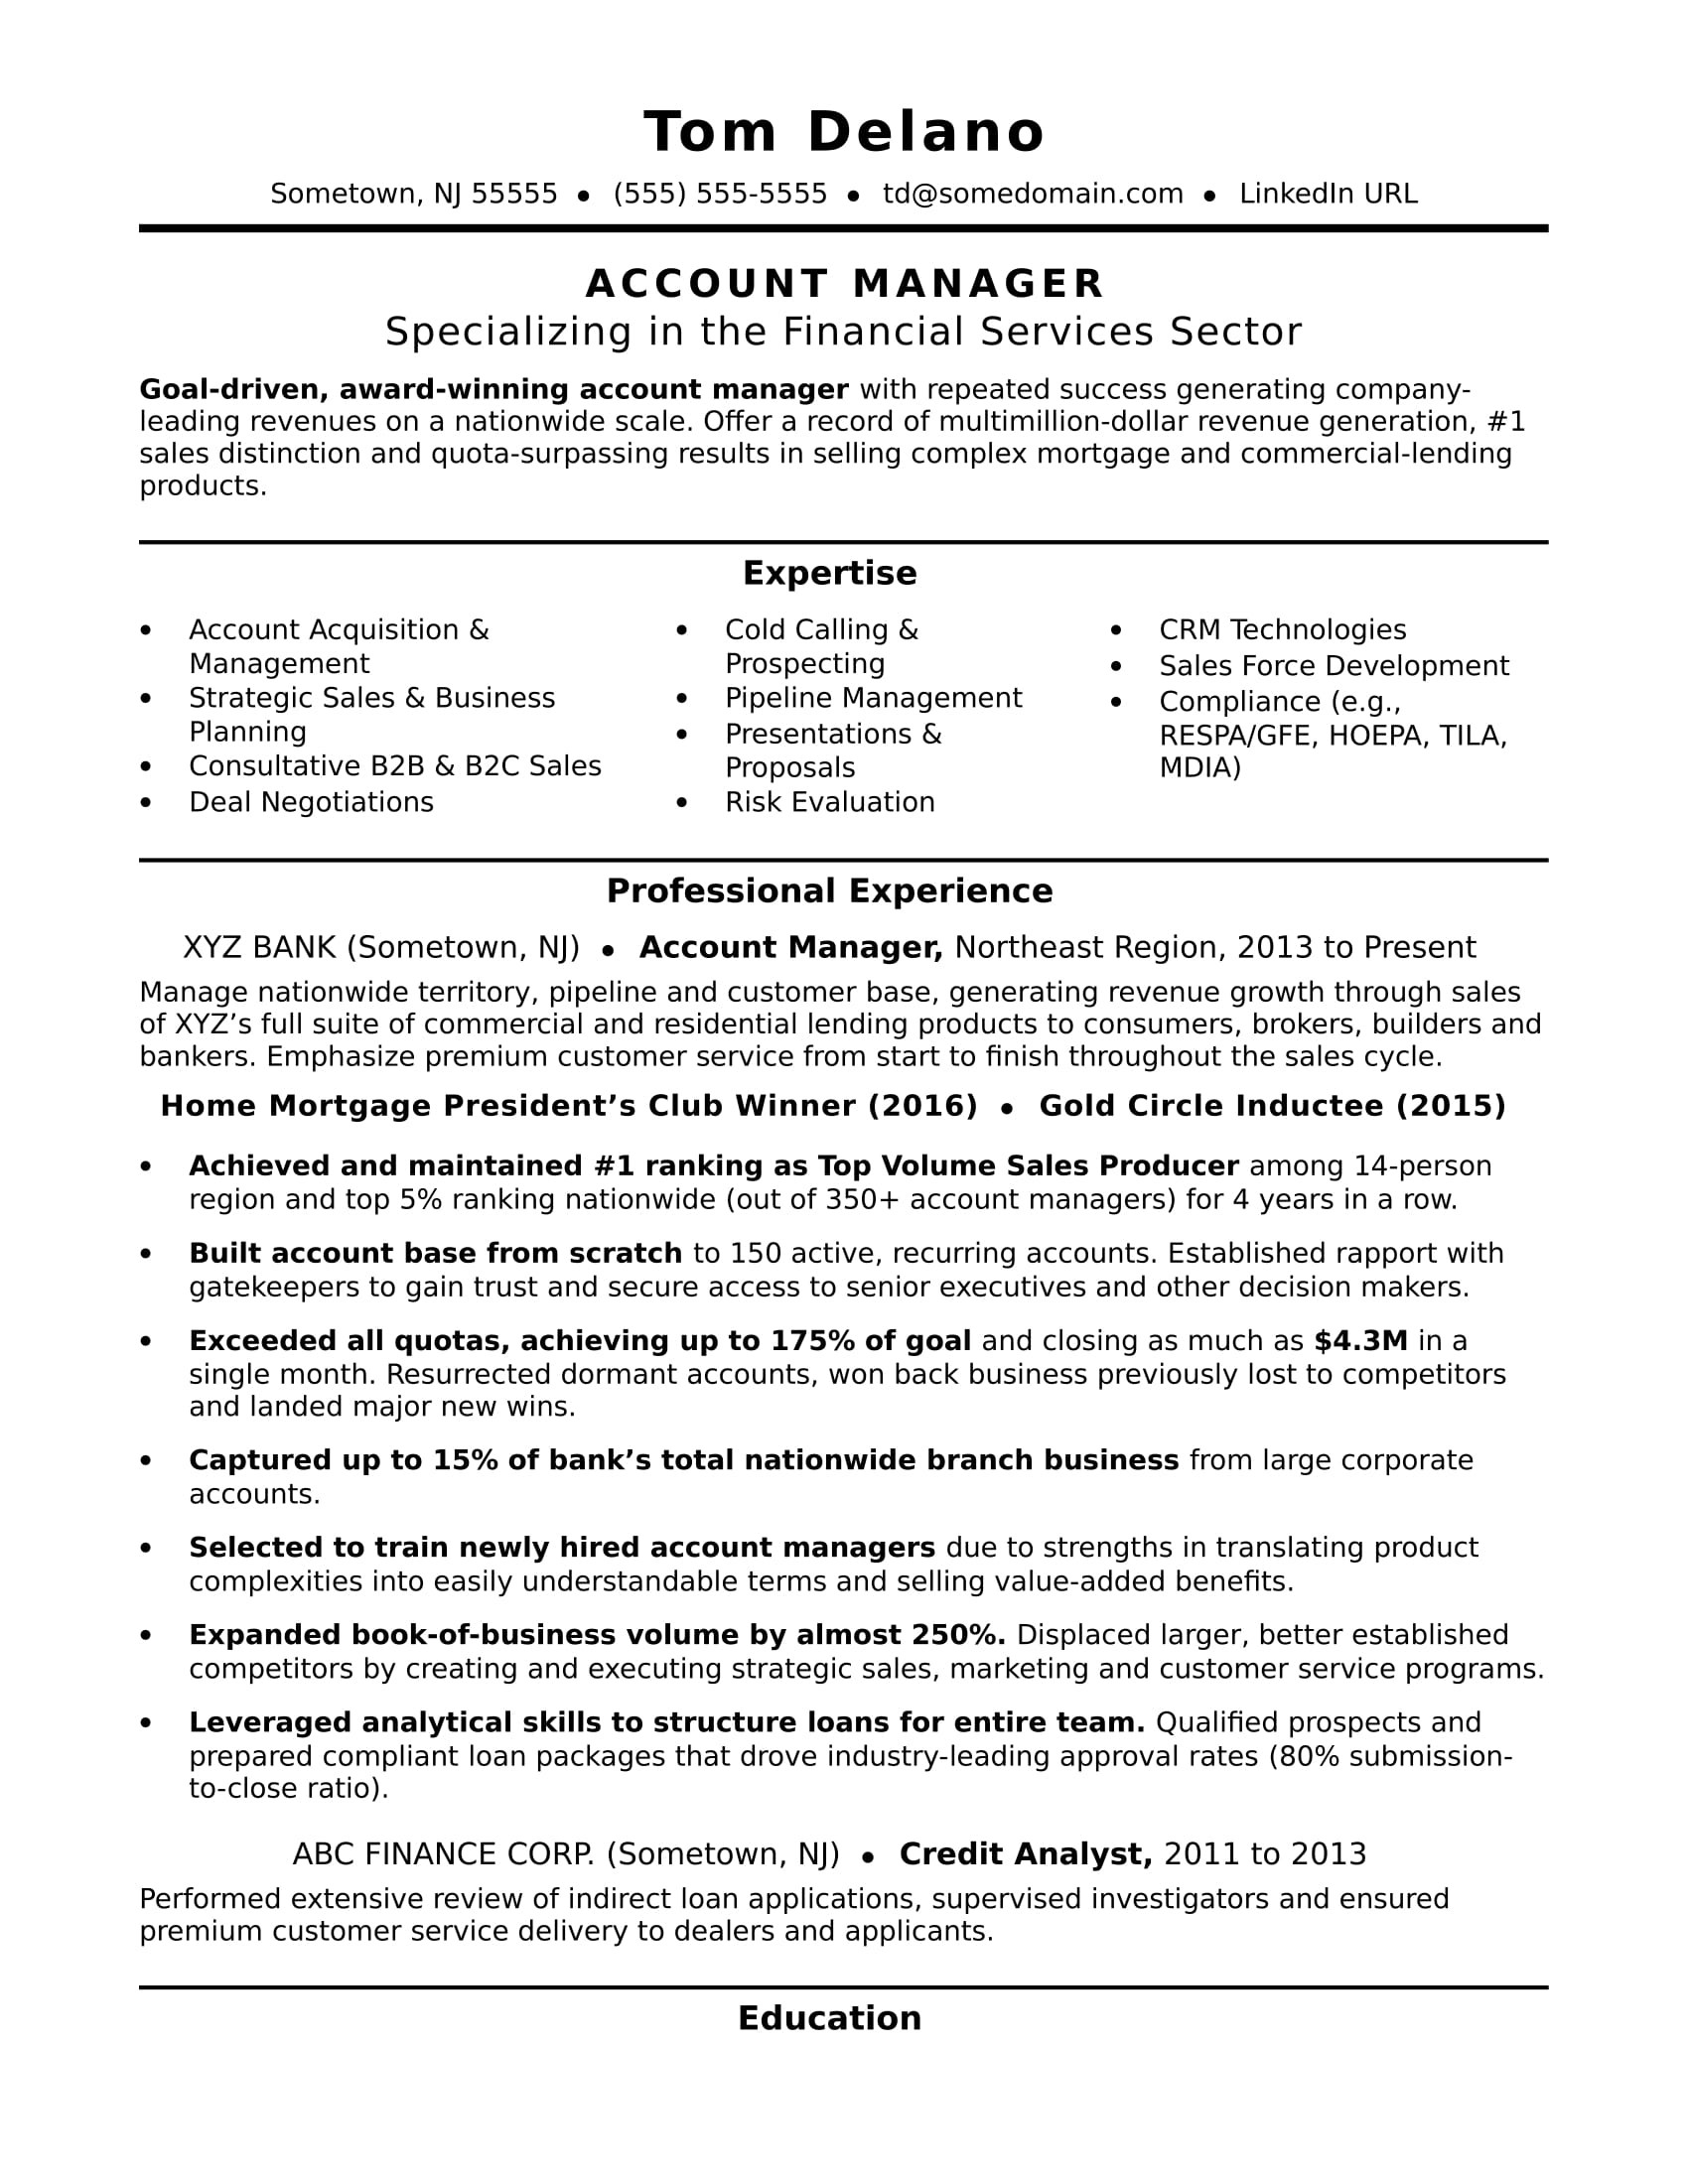 Customer Service Manager Resume Sample Templates Account Manager Resume Sample Monster.com